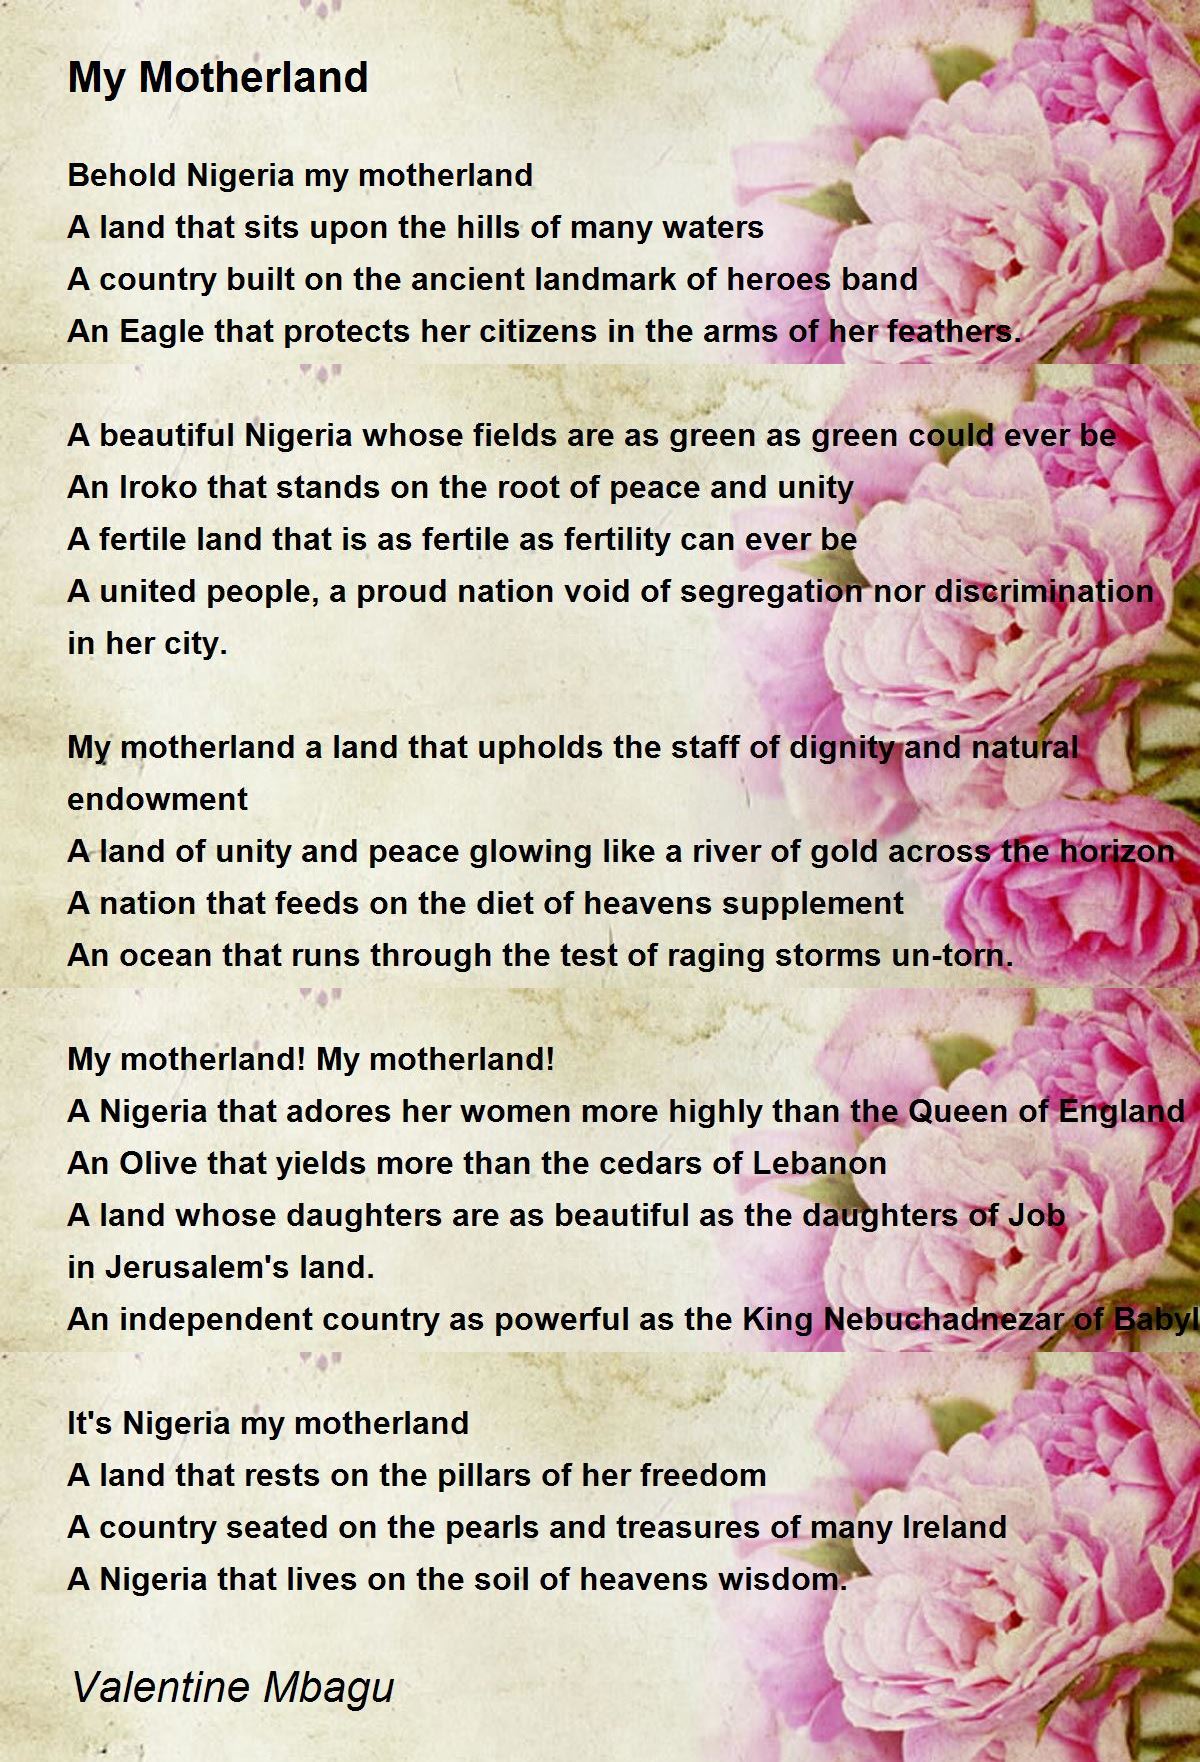 My Motherland - My Motherland Poem by Valentine Mbagu